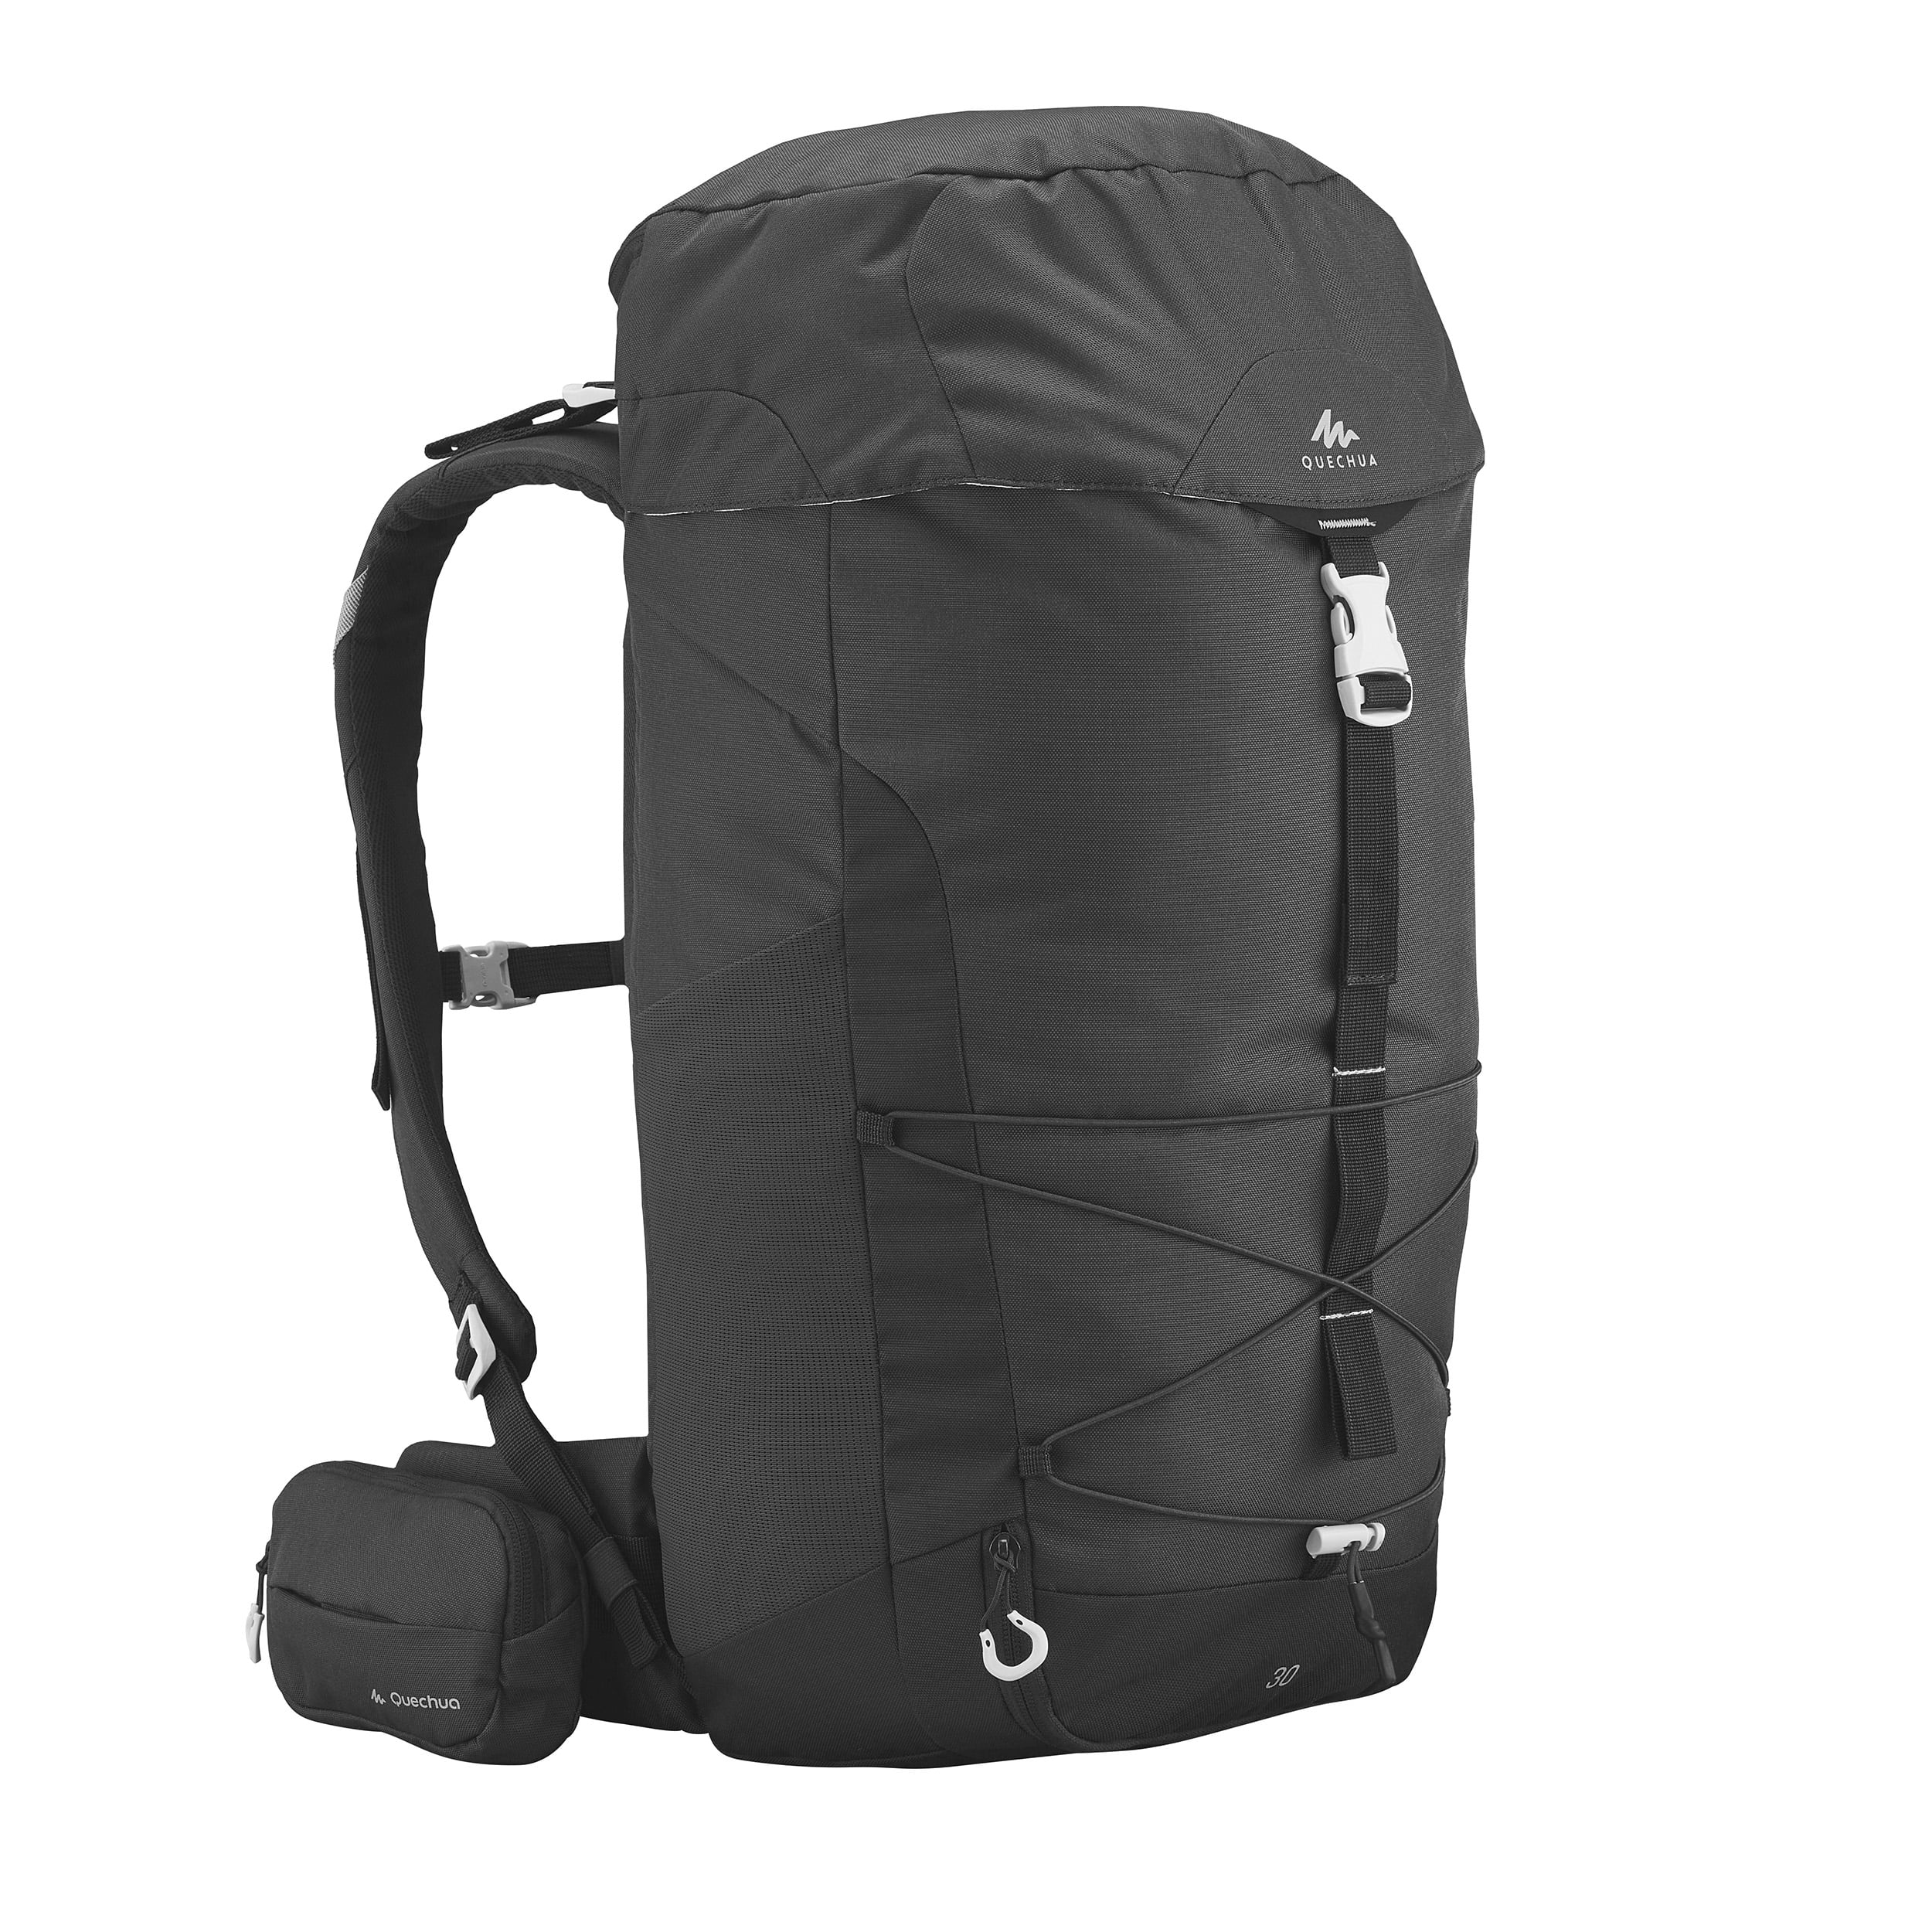 Decathlon Quechua MH100, Adult Hiking Backpack, 30 L, Black